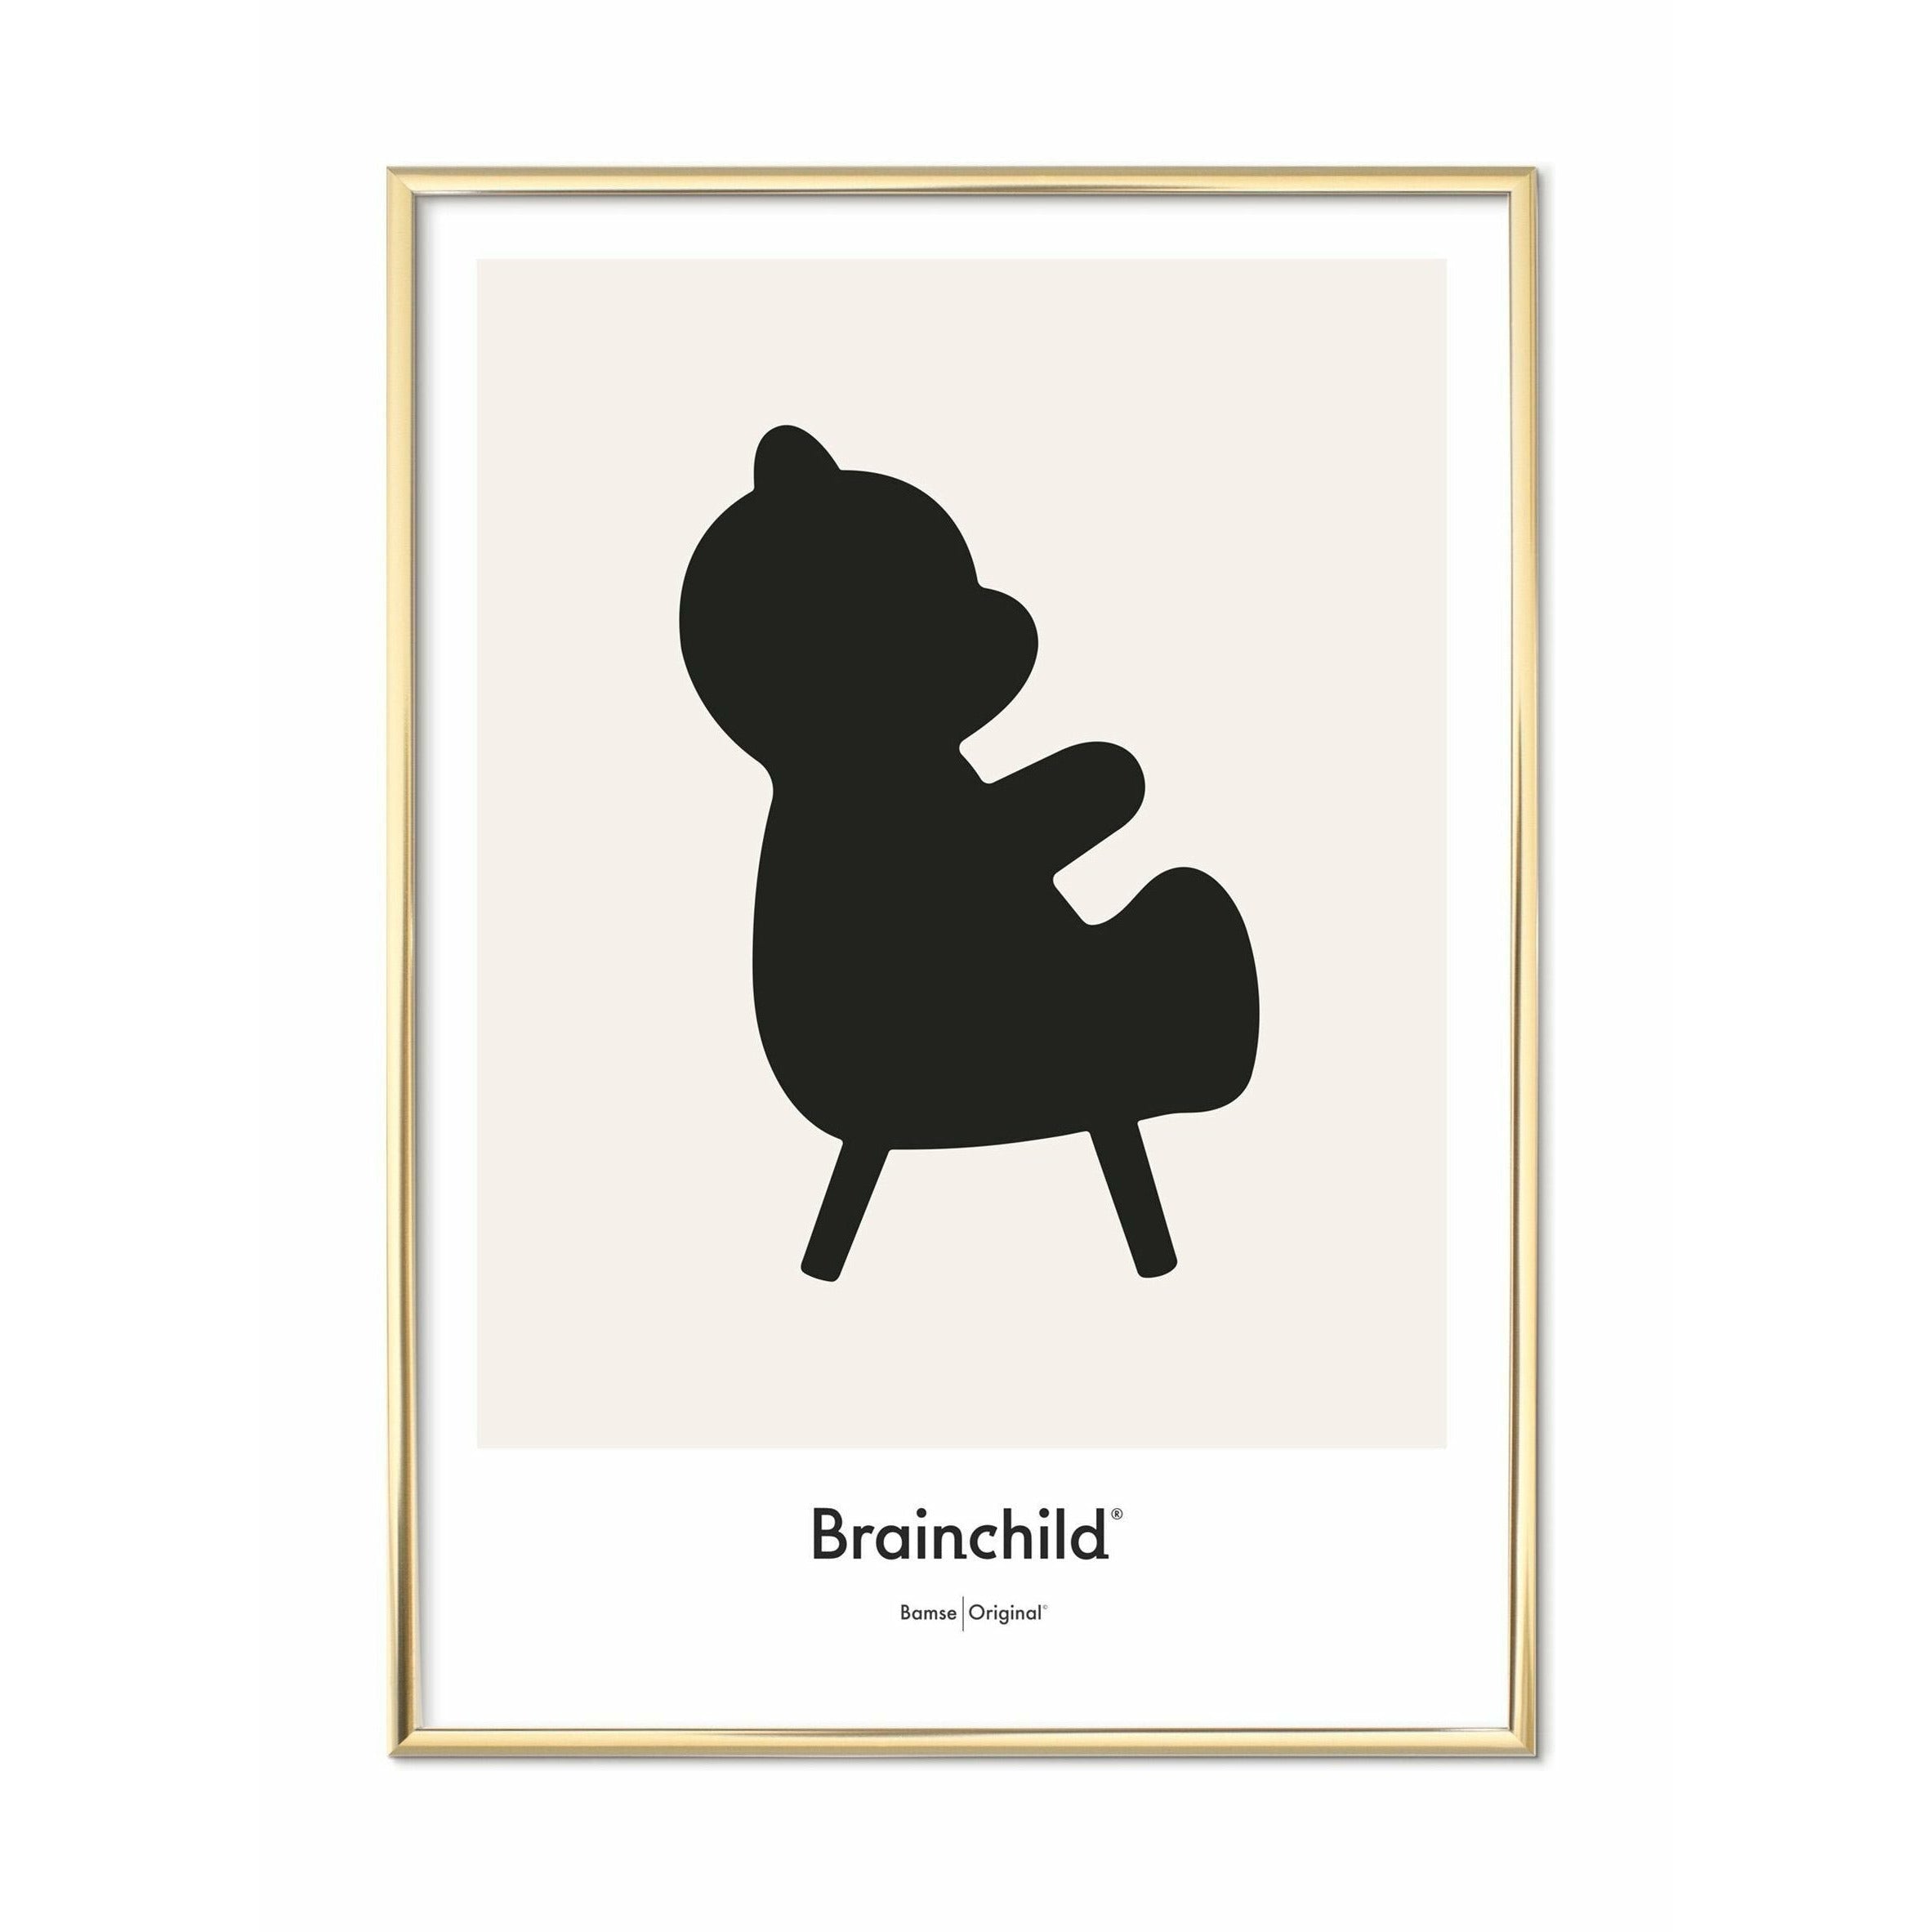 Cartel de diseño de diseño de oso de peluche Brainhild, marco de latón A5, gris